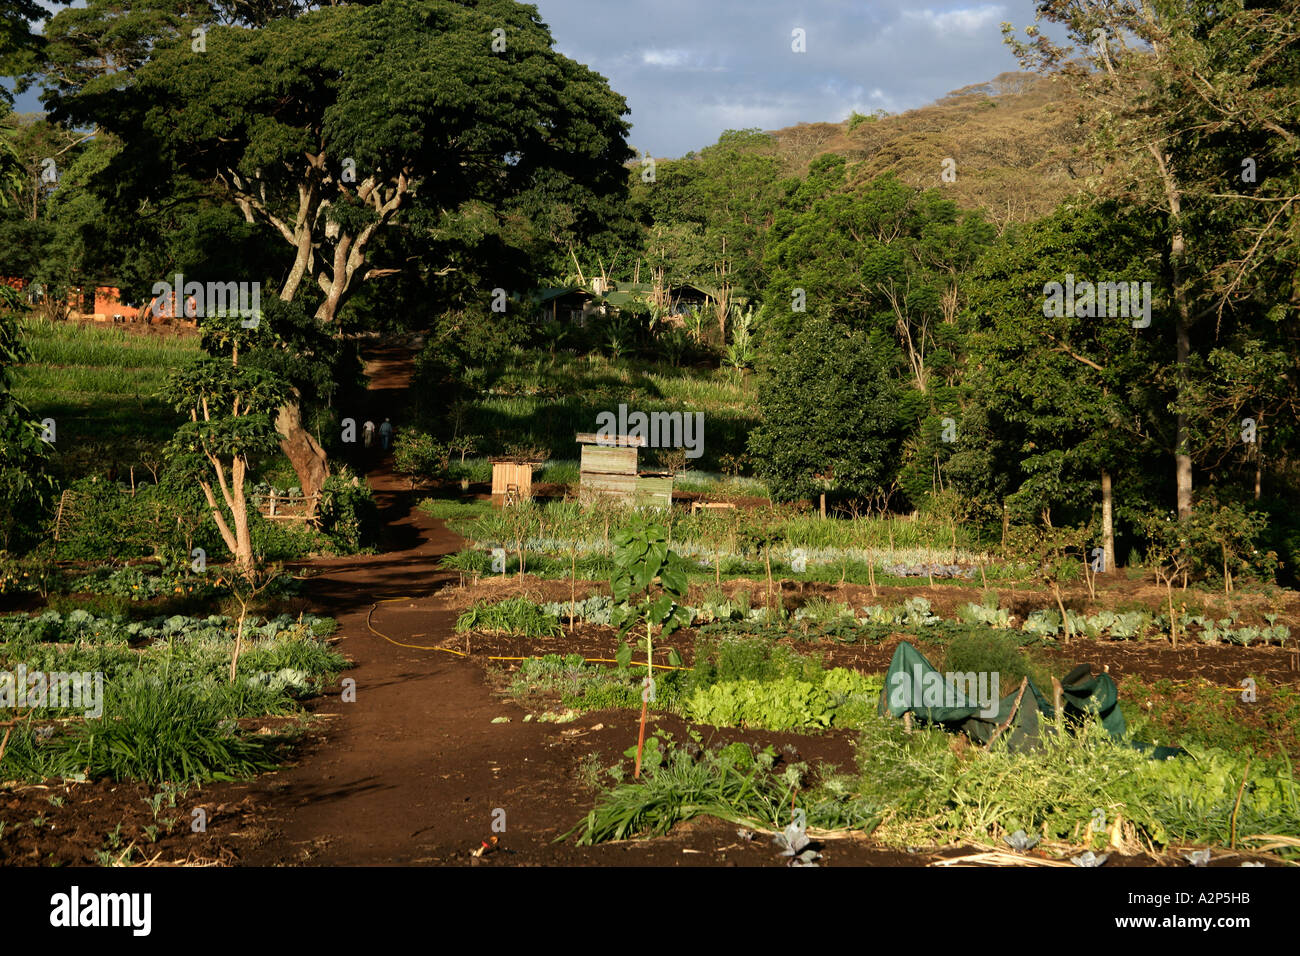 GIBB S FARM Organic gardens Tanzania Stock Photo